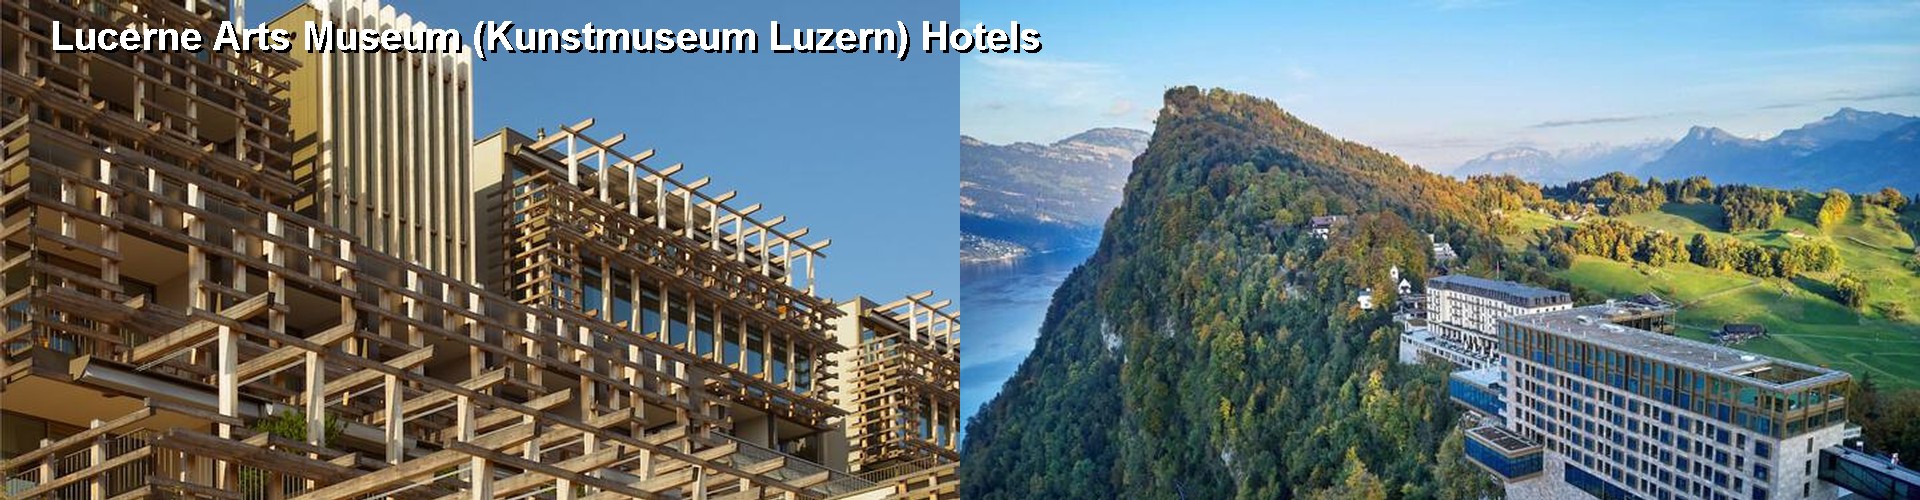 5 Best Hotels near Lucerne Arts Museum (Kunstmuseum Luzern)